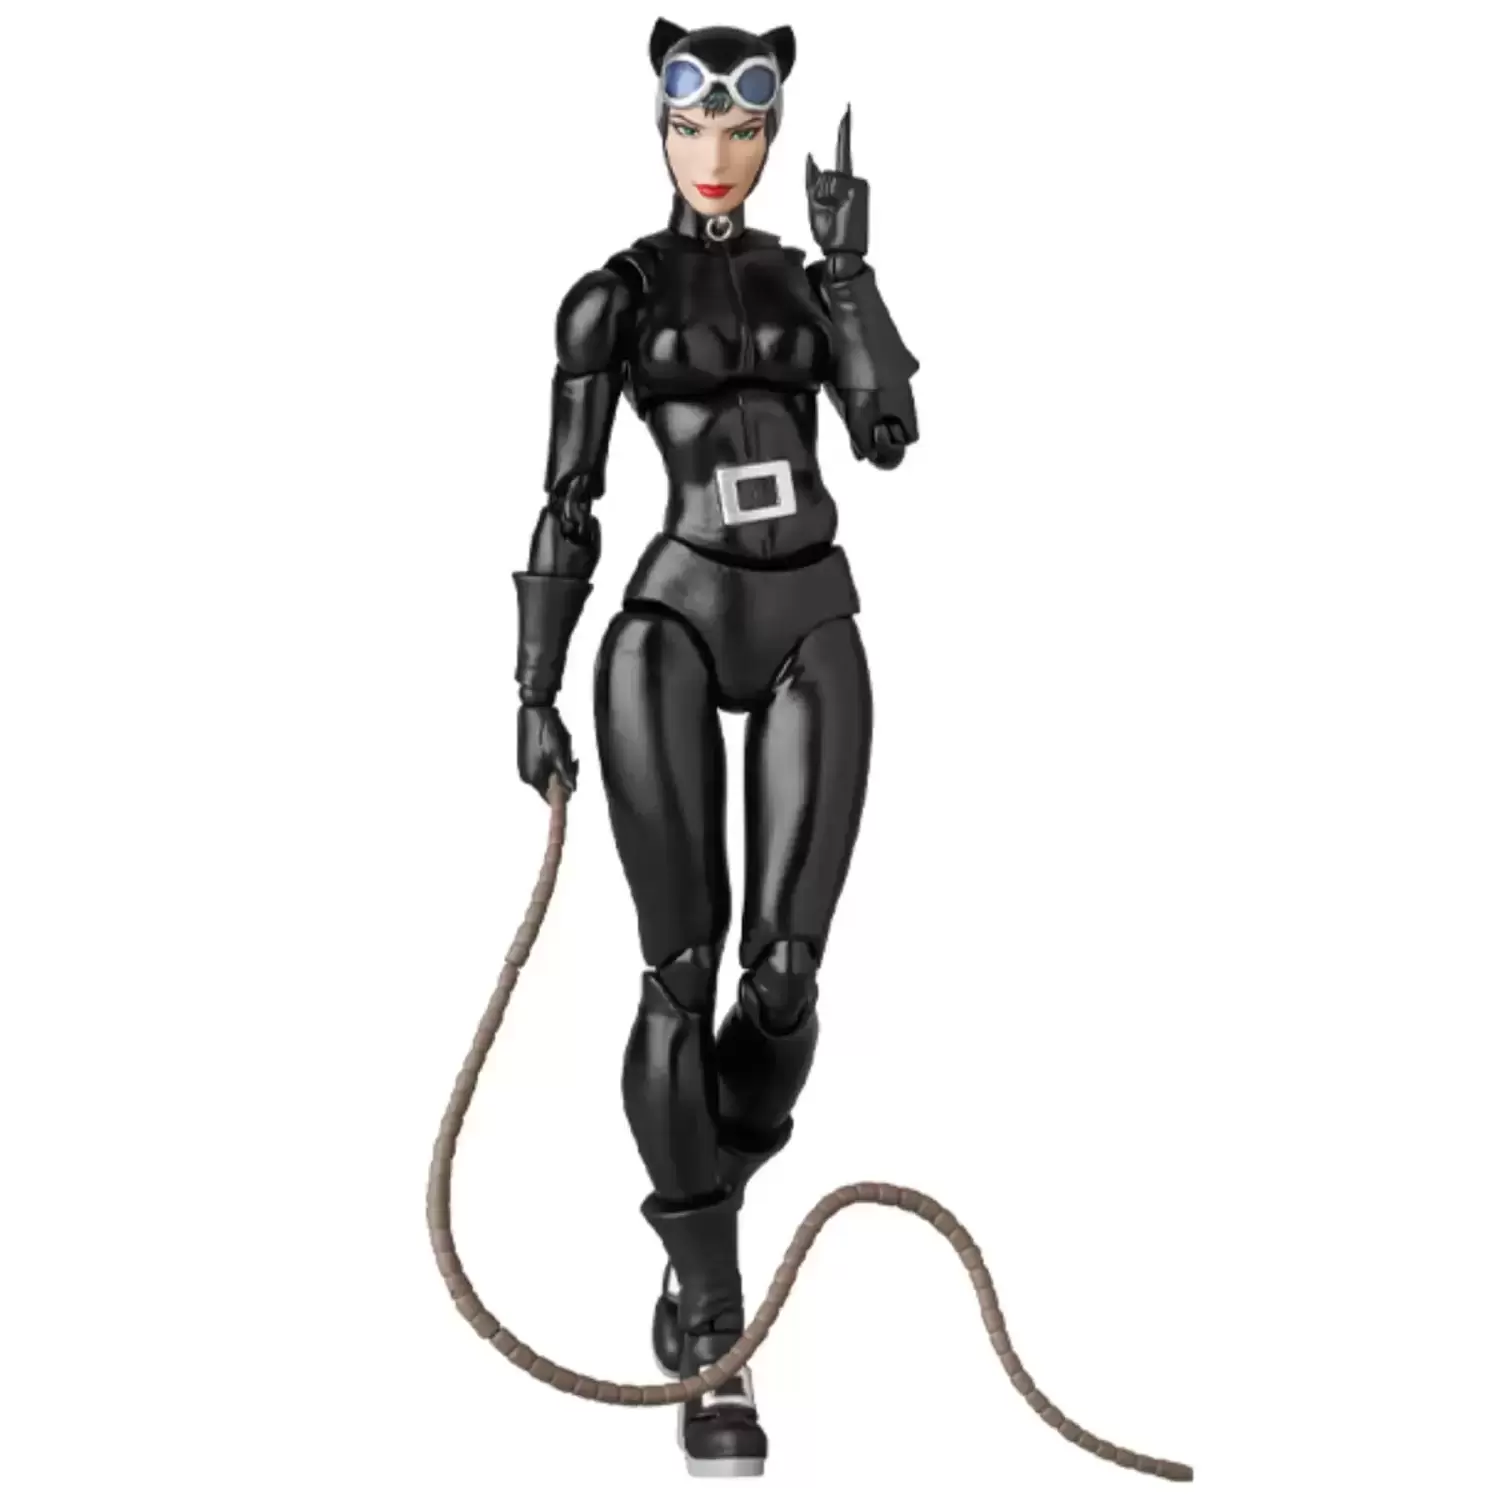 MAFEX (Medicom Toy) - Catwoman - Batman Hush